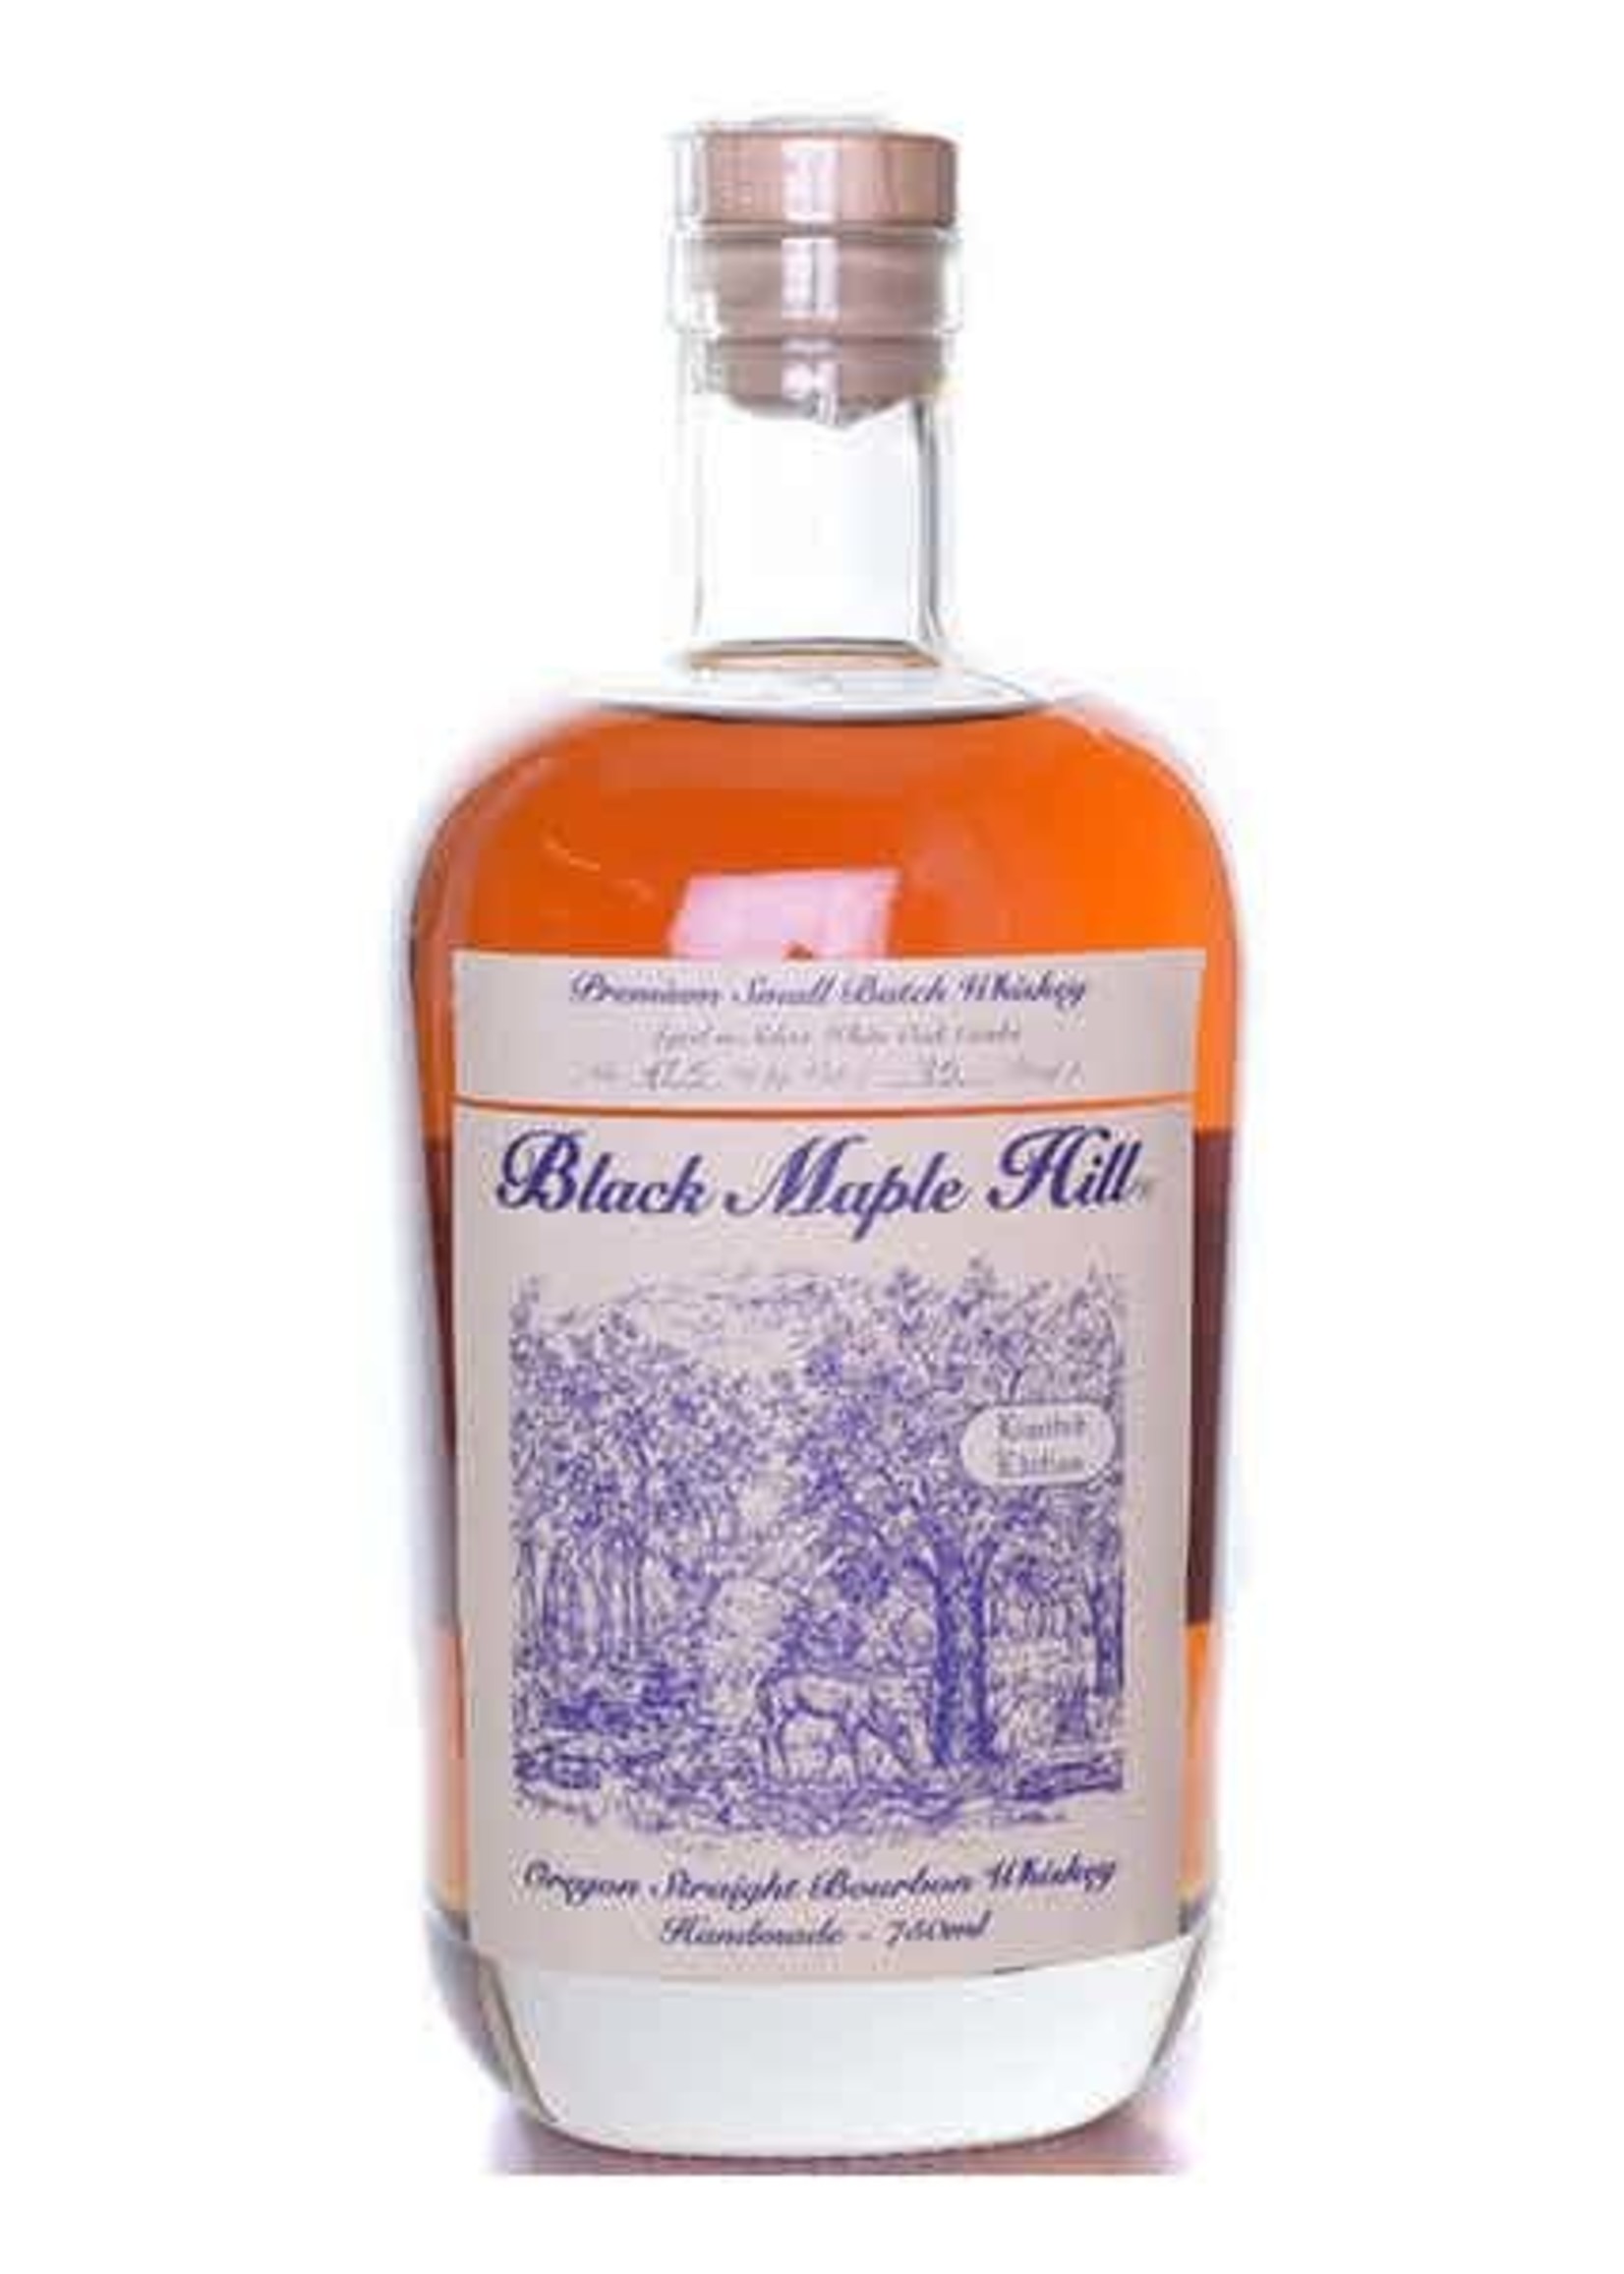 Black Maple Hill Black Maple Hill Oregon Bourbon Whiskey